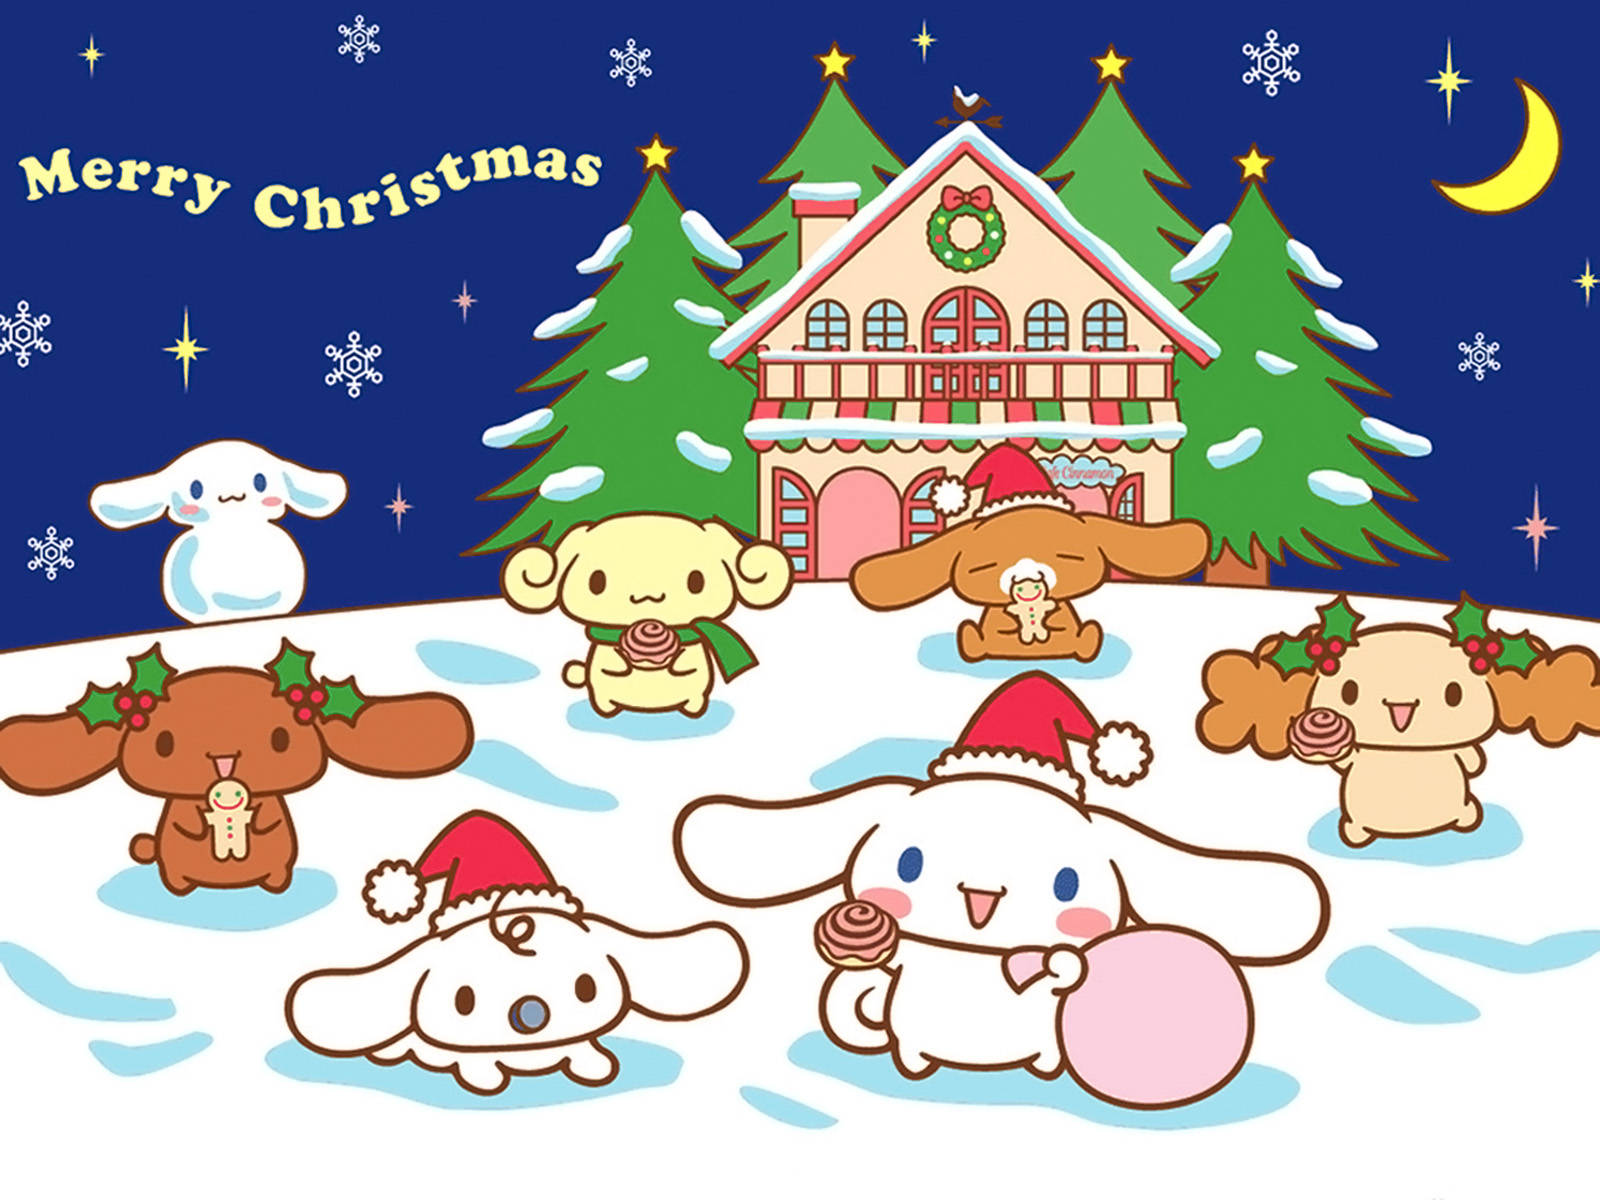 Merry Christmas Sanrio Characters Wallpaper